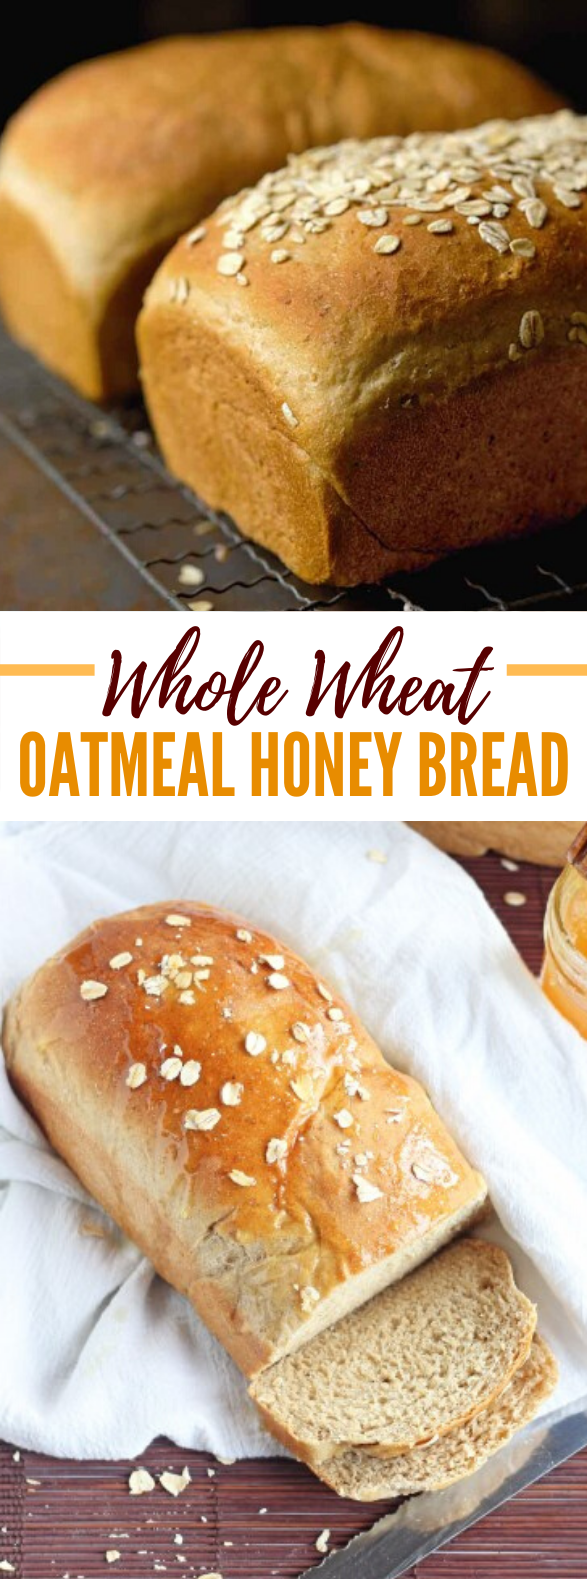 WHOLE WHEAT OATMEAL HONEY BREAD #favoritemeal #sandwiches